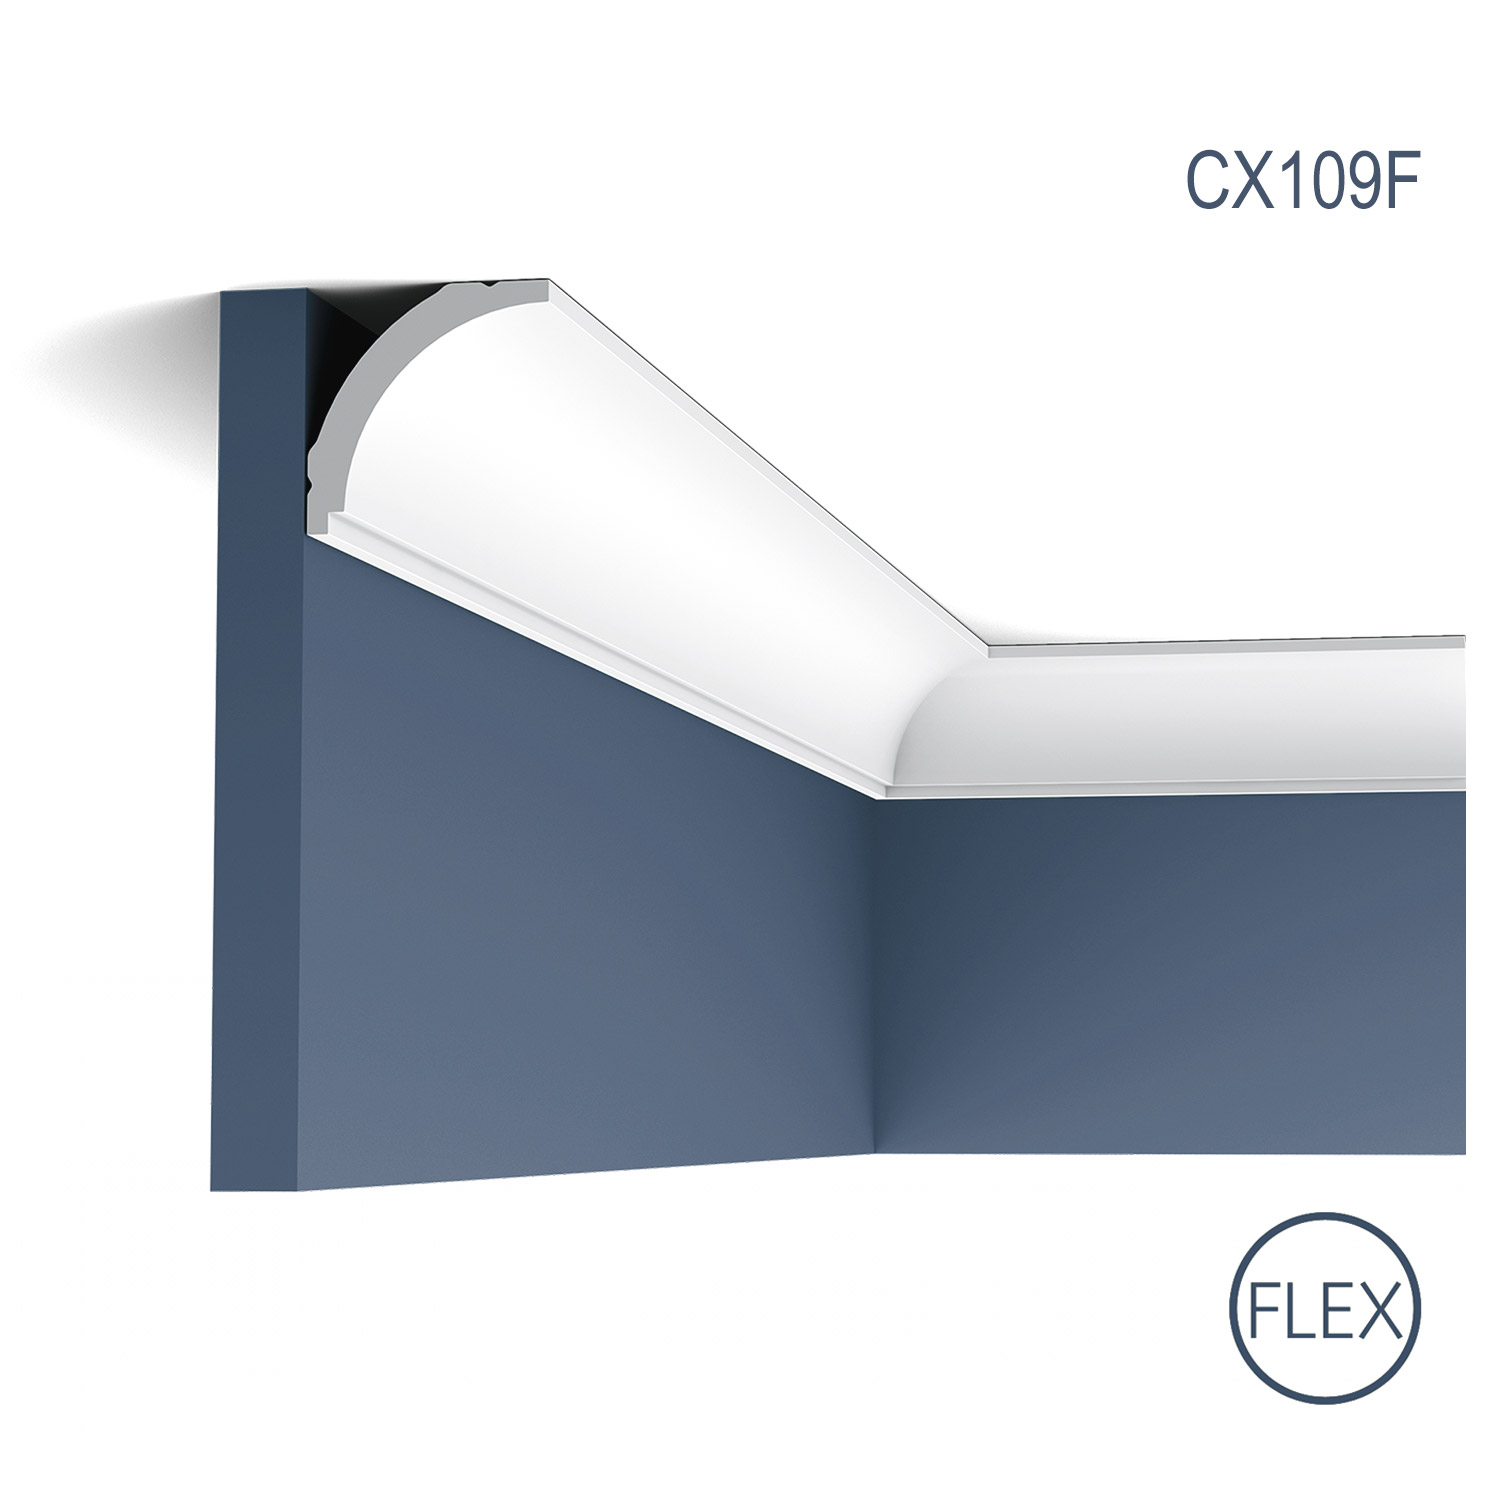 Cornisa Flex Axxent CX109F, Dimensiuni: 200 X 4.4 X 4.4 cm, Orac Decor Orac Decor